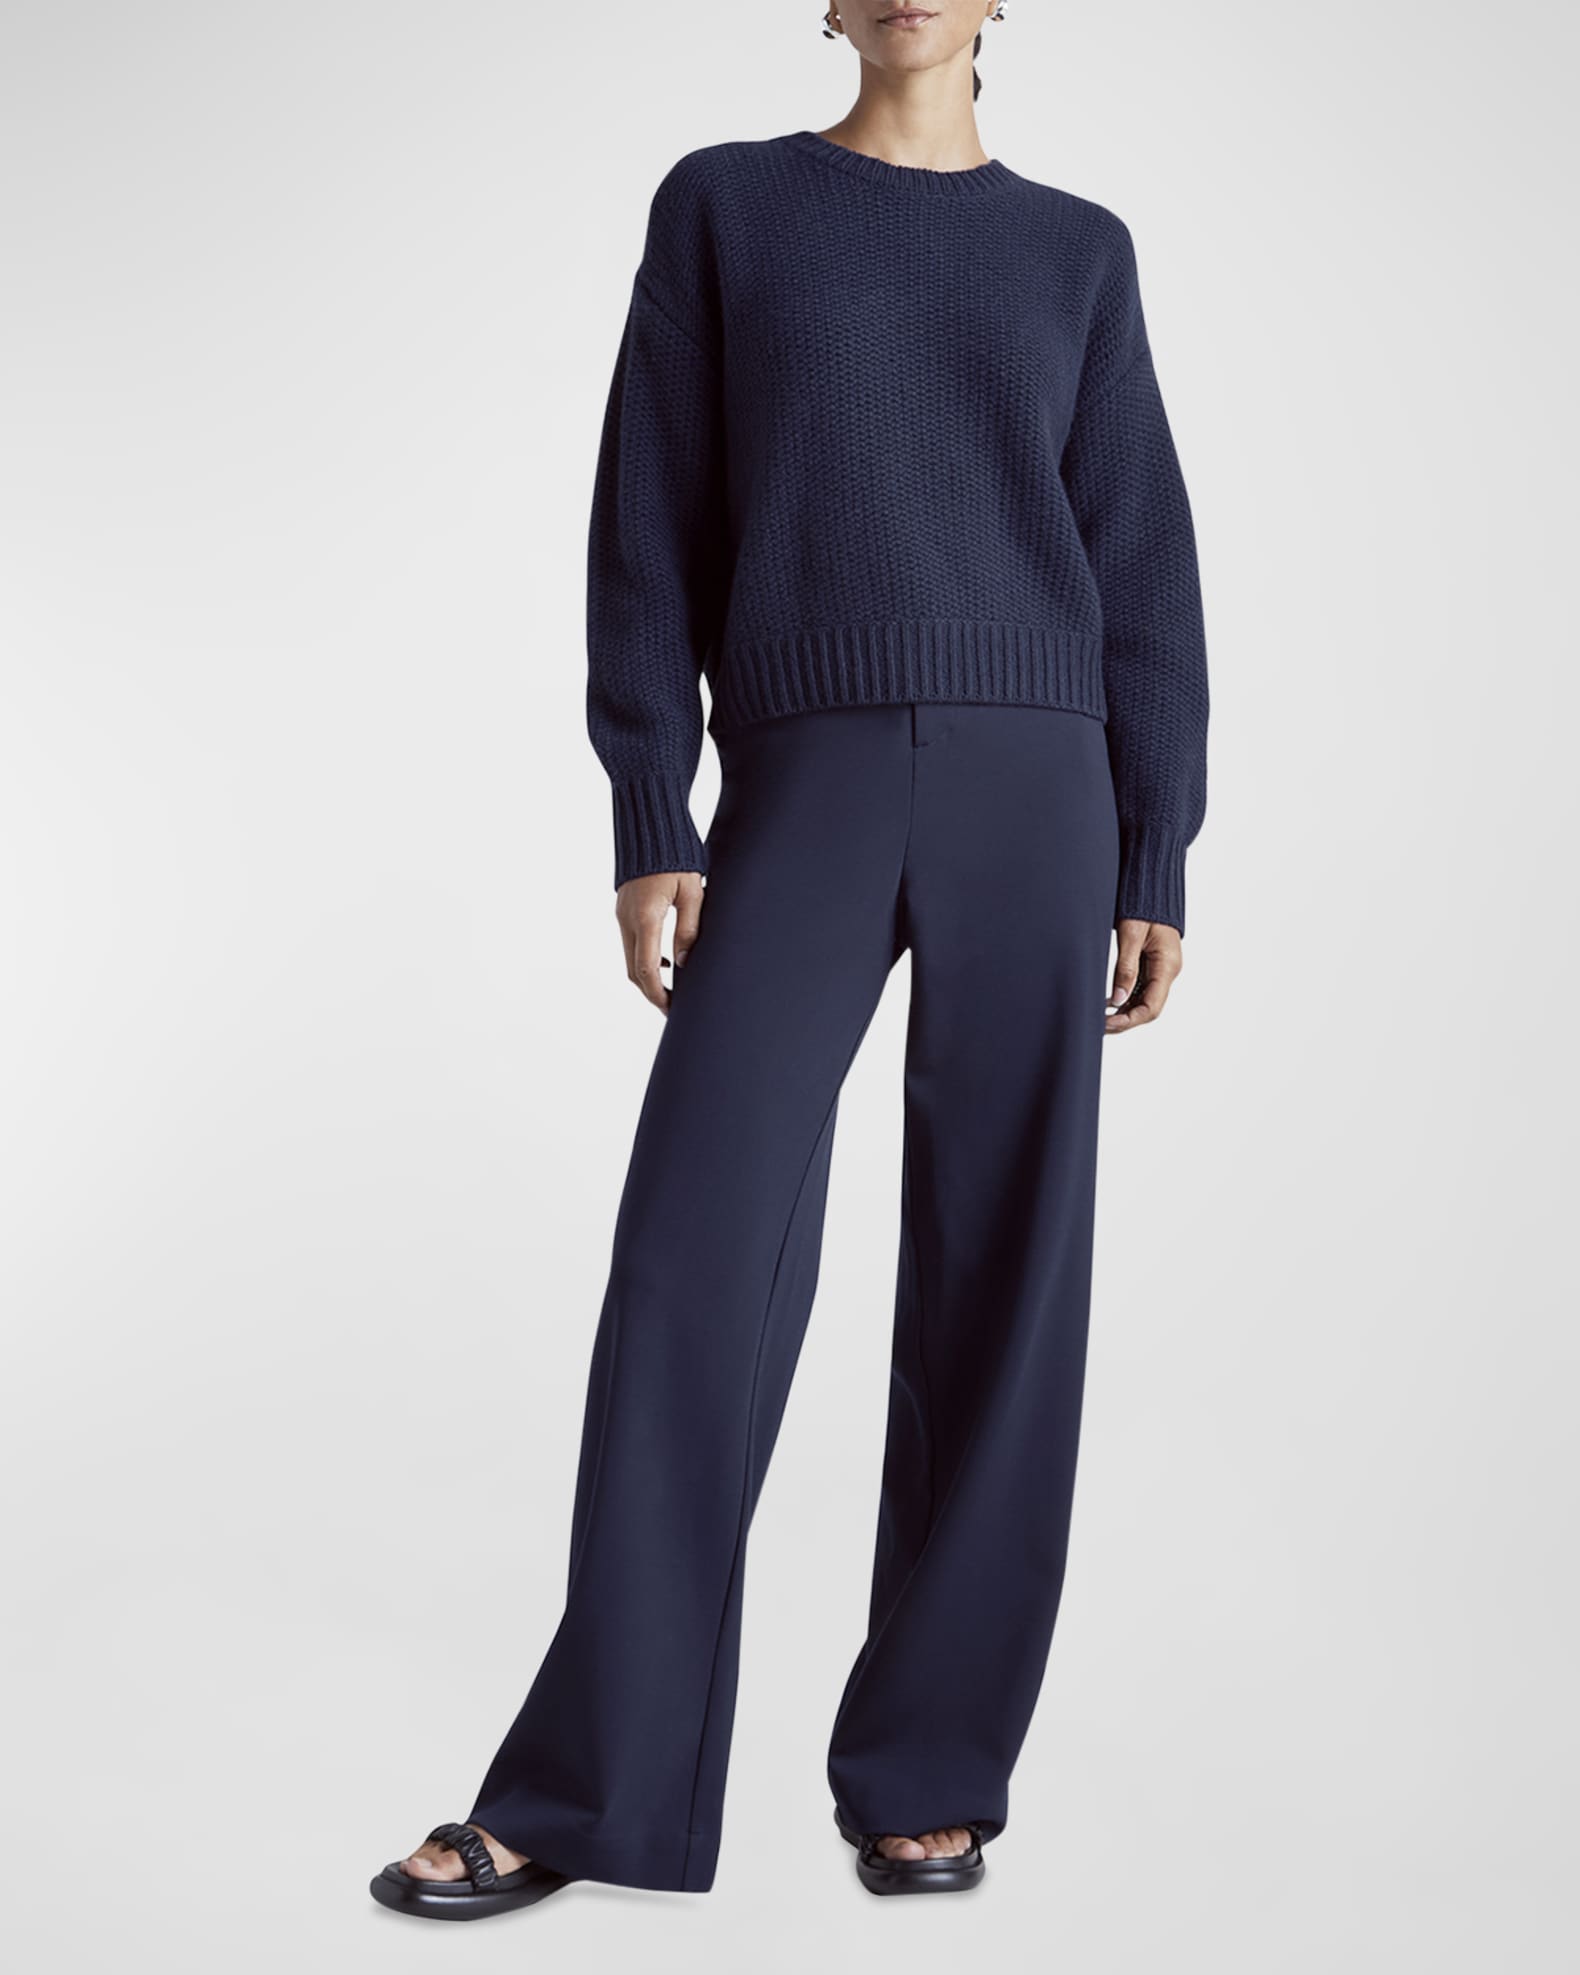 Splendid x Kate Young Cashmere Crewneck Sweater | Neiman Marcus